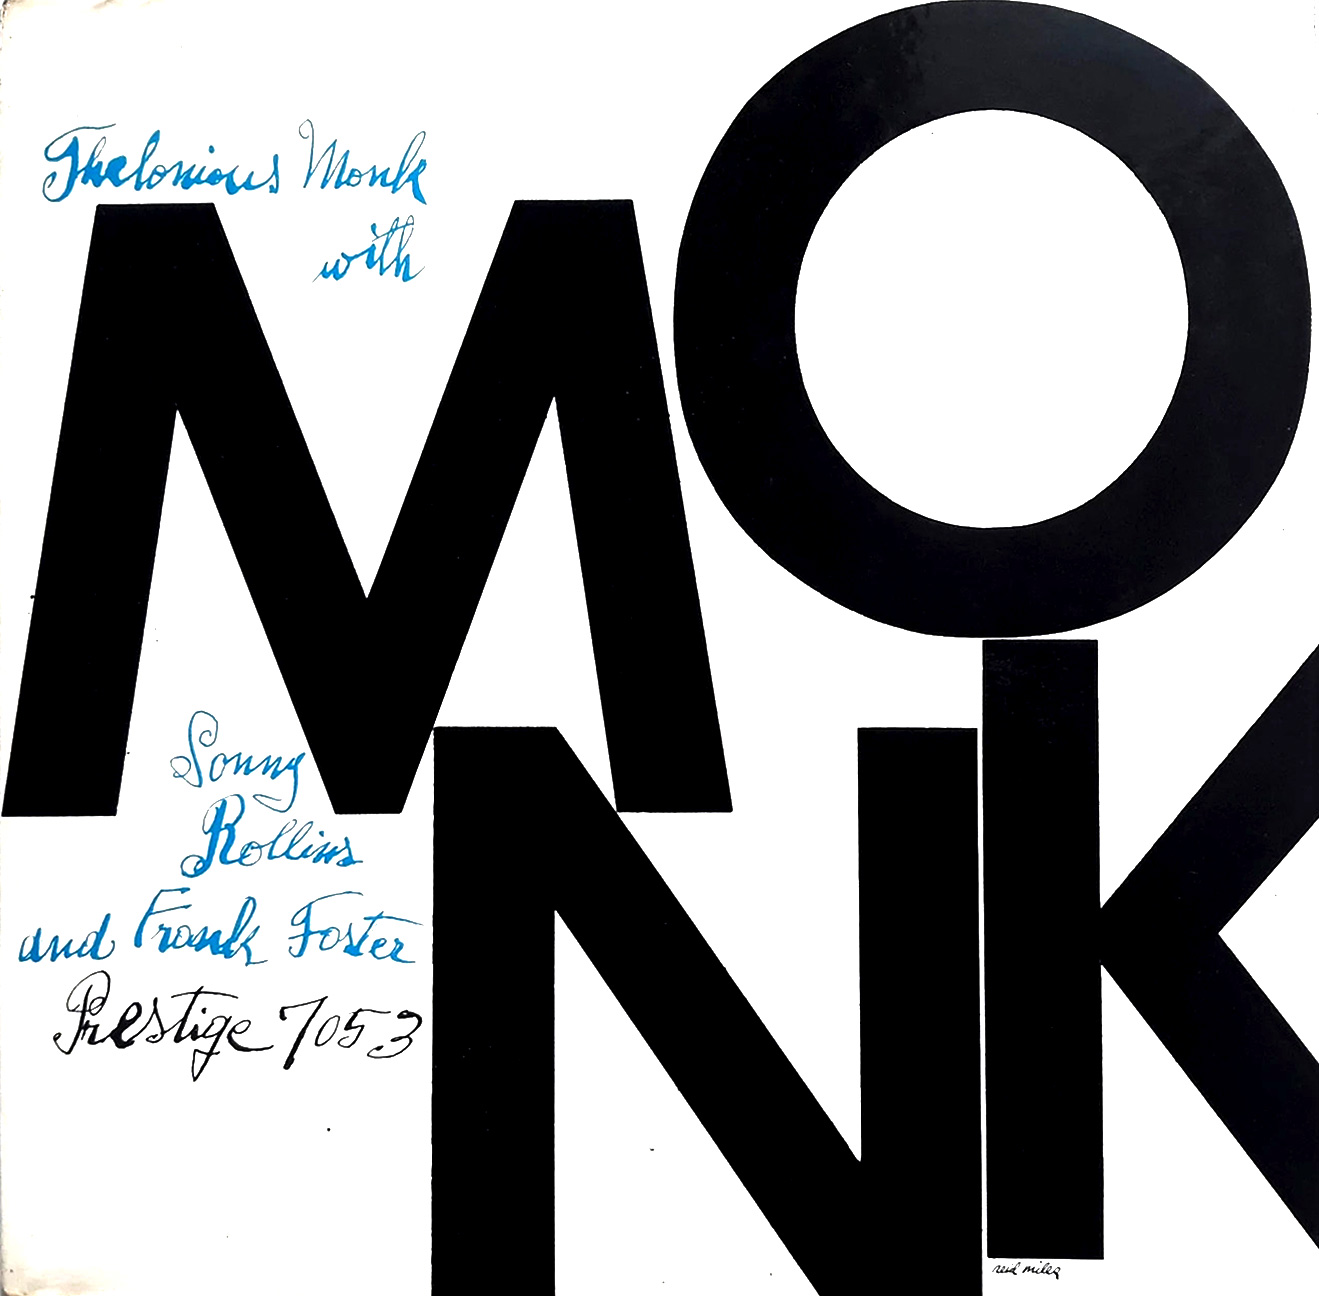 monk-pochette-vinyle-jazz-miles